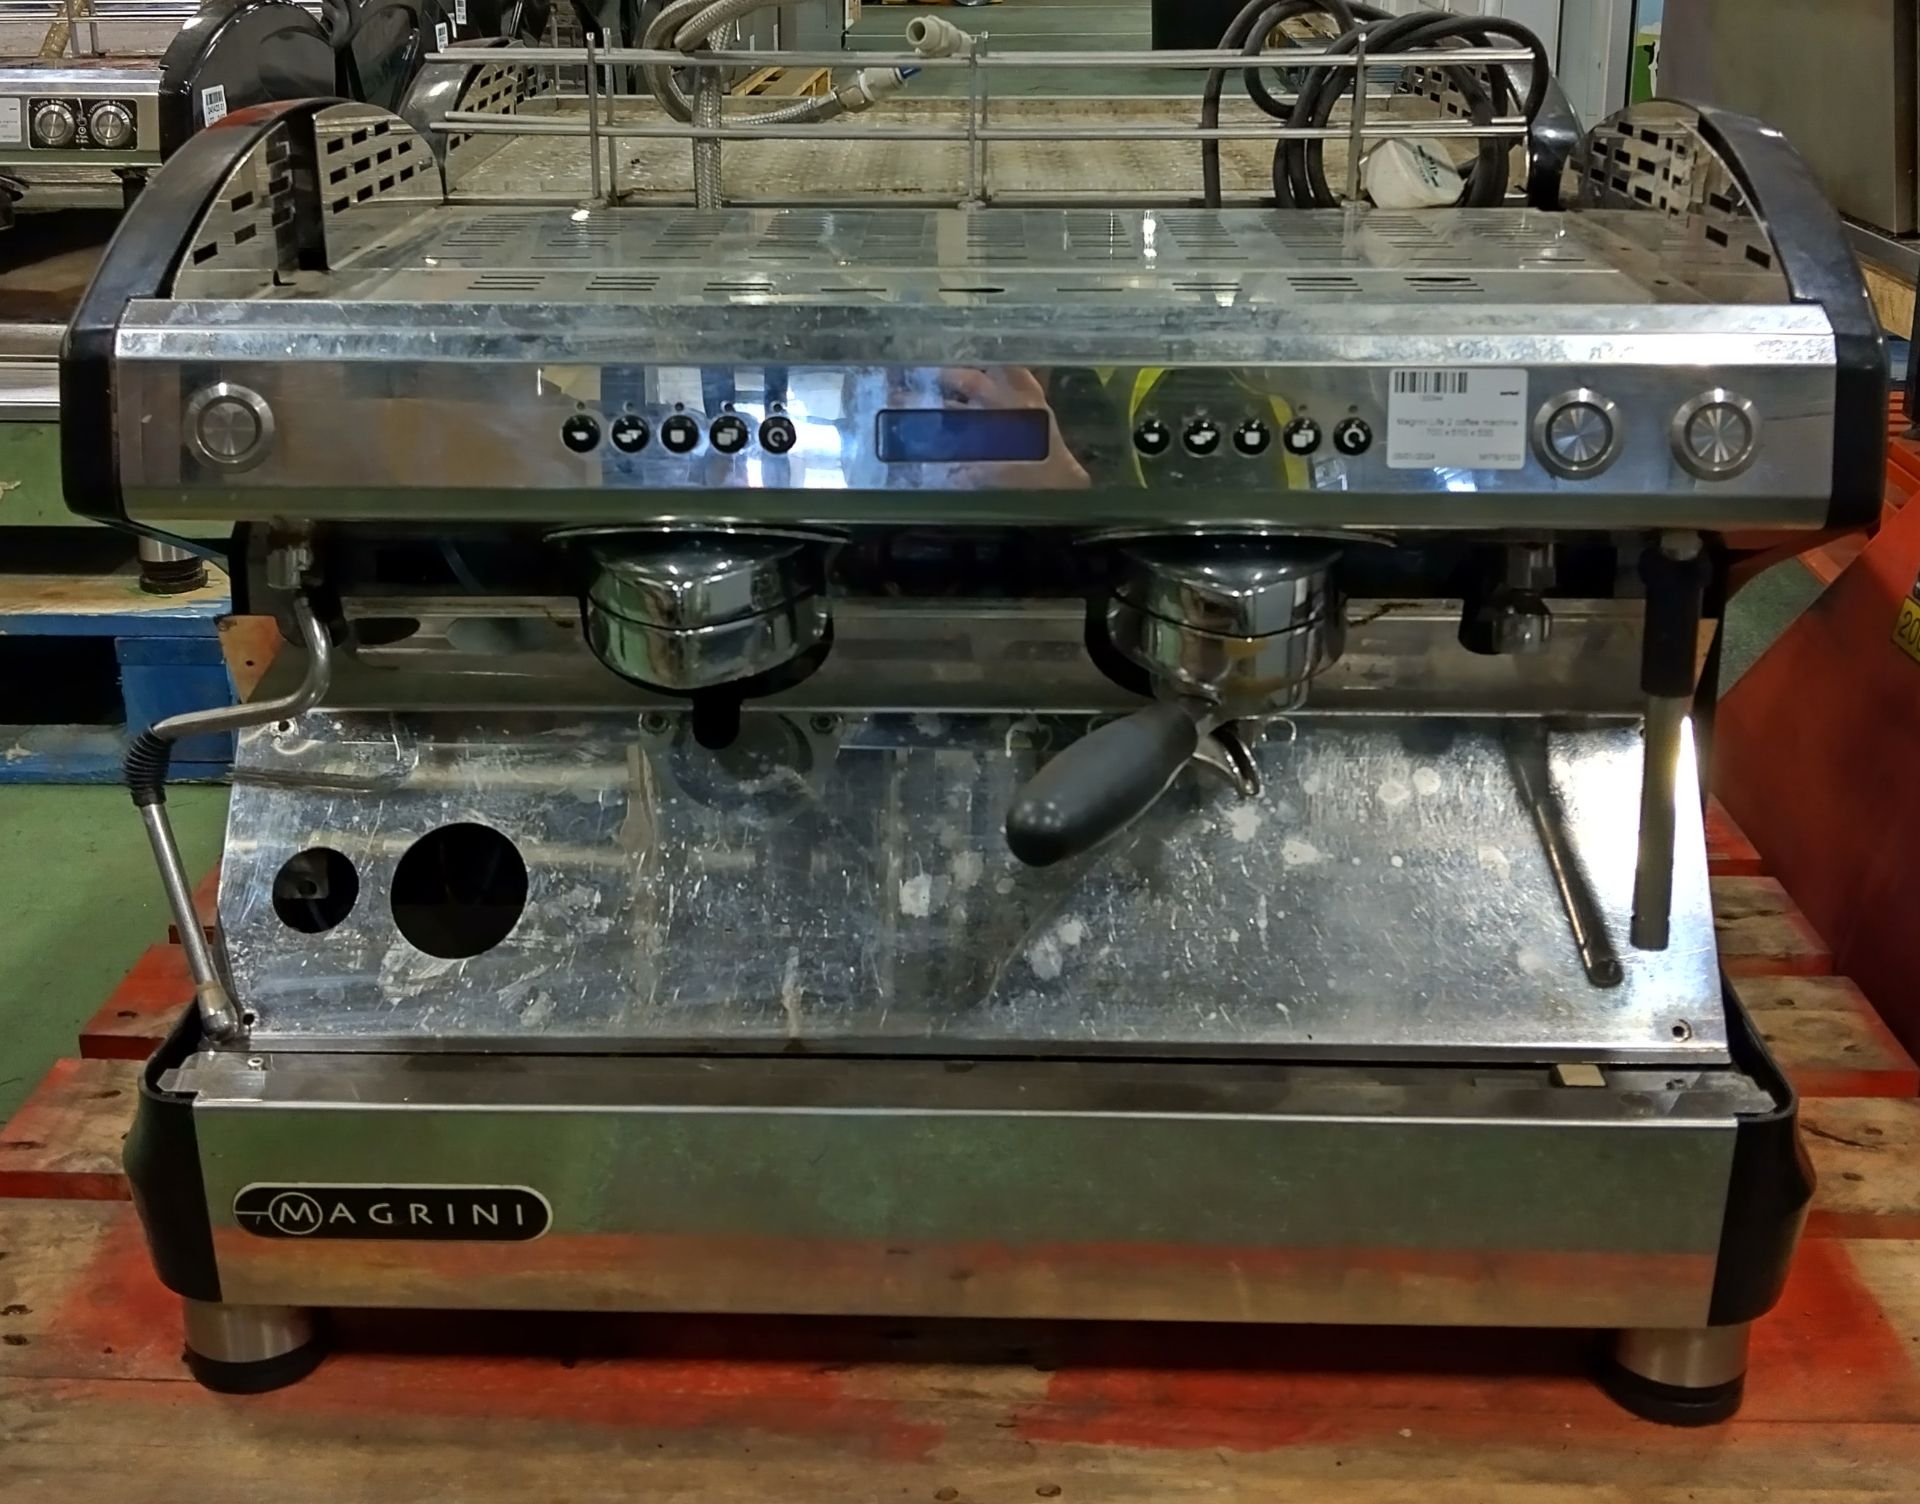 Magrini Life 2 coffee machine (missing drip tray) - 700 x 510 x 530mm - Image 2 of 4